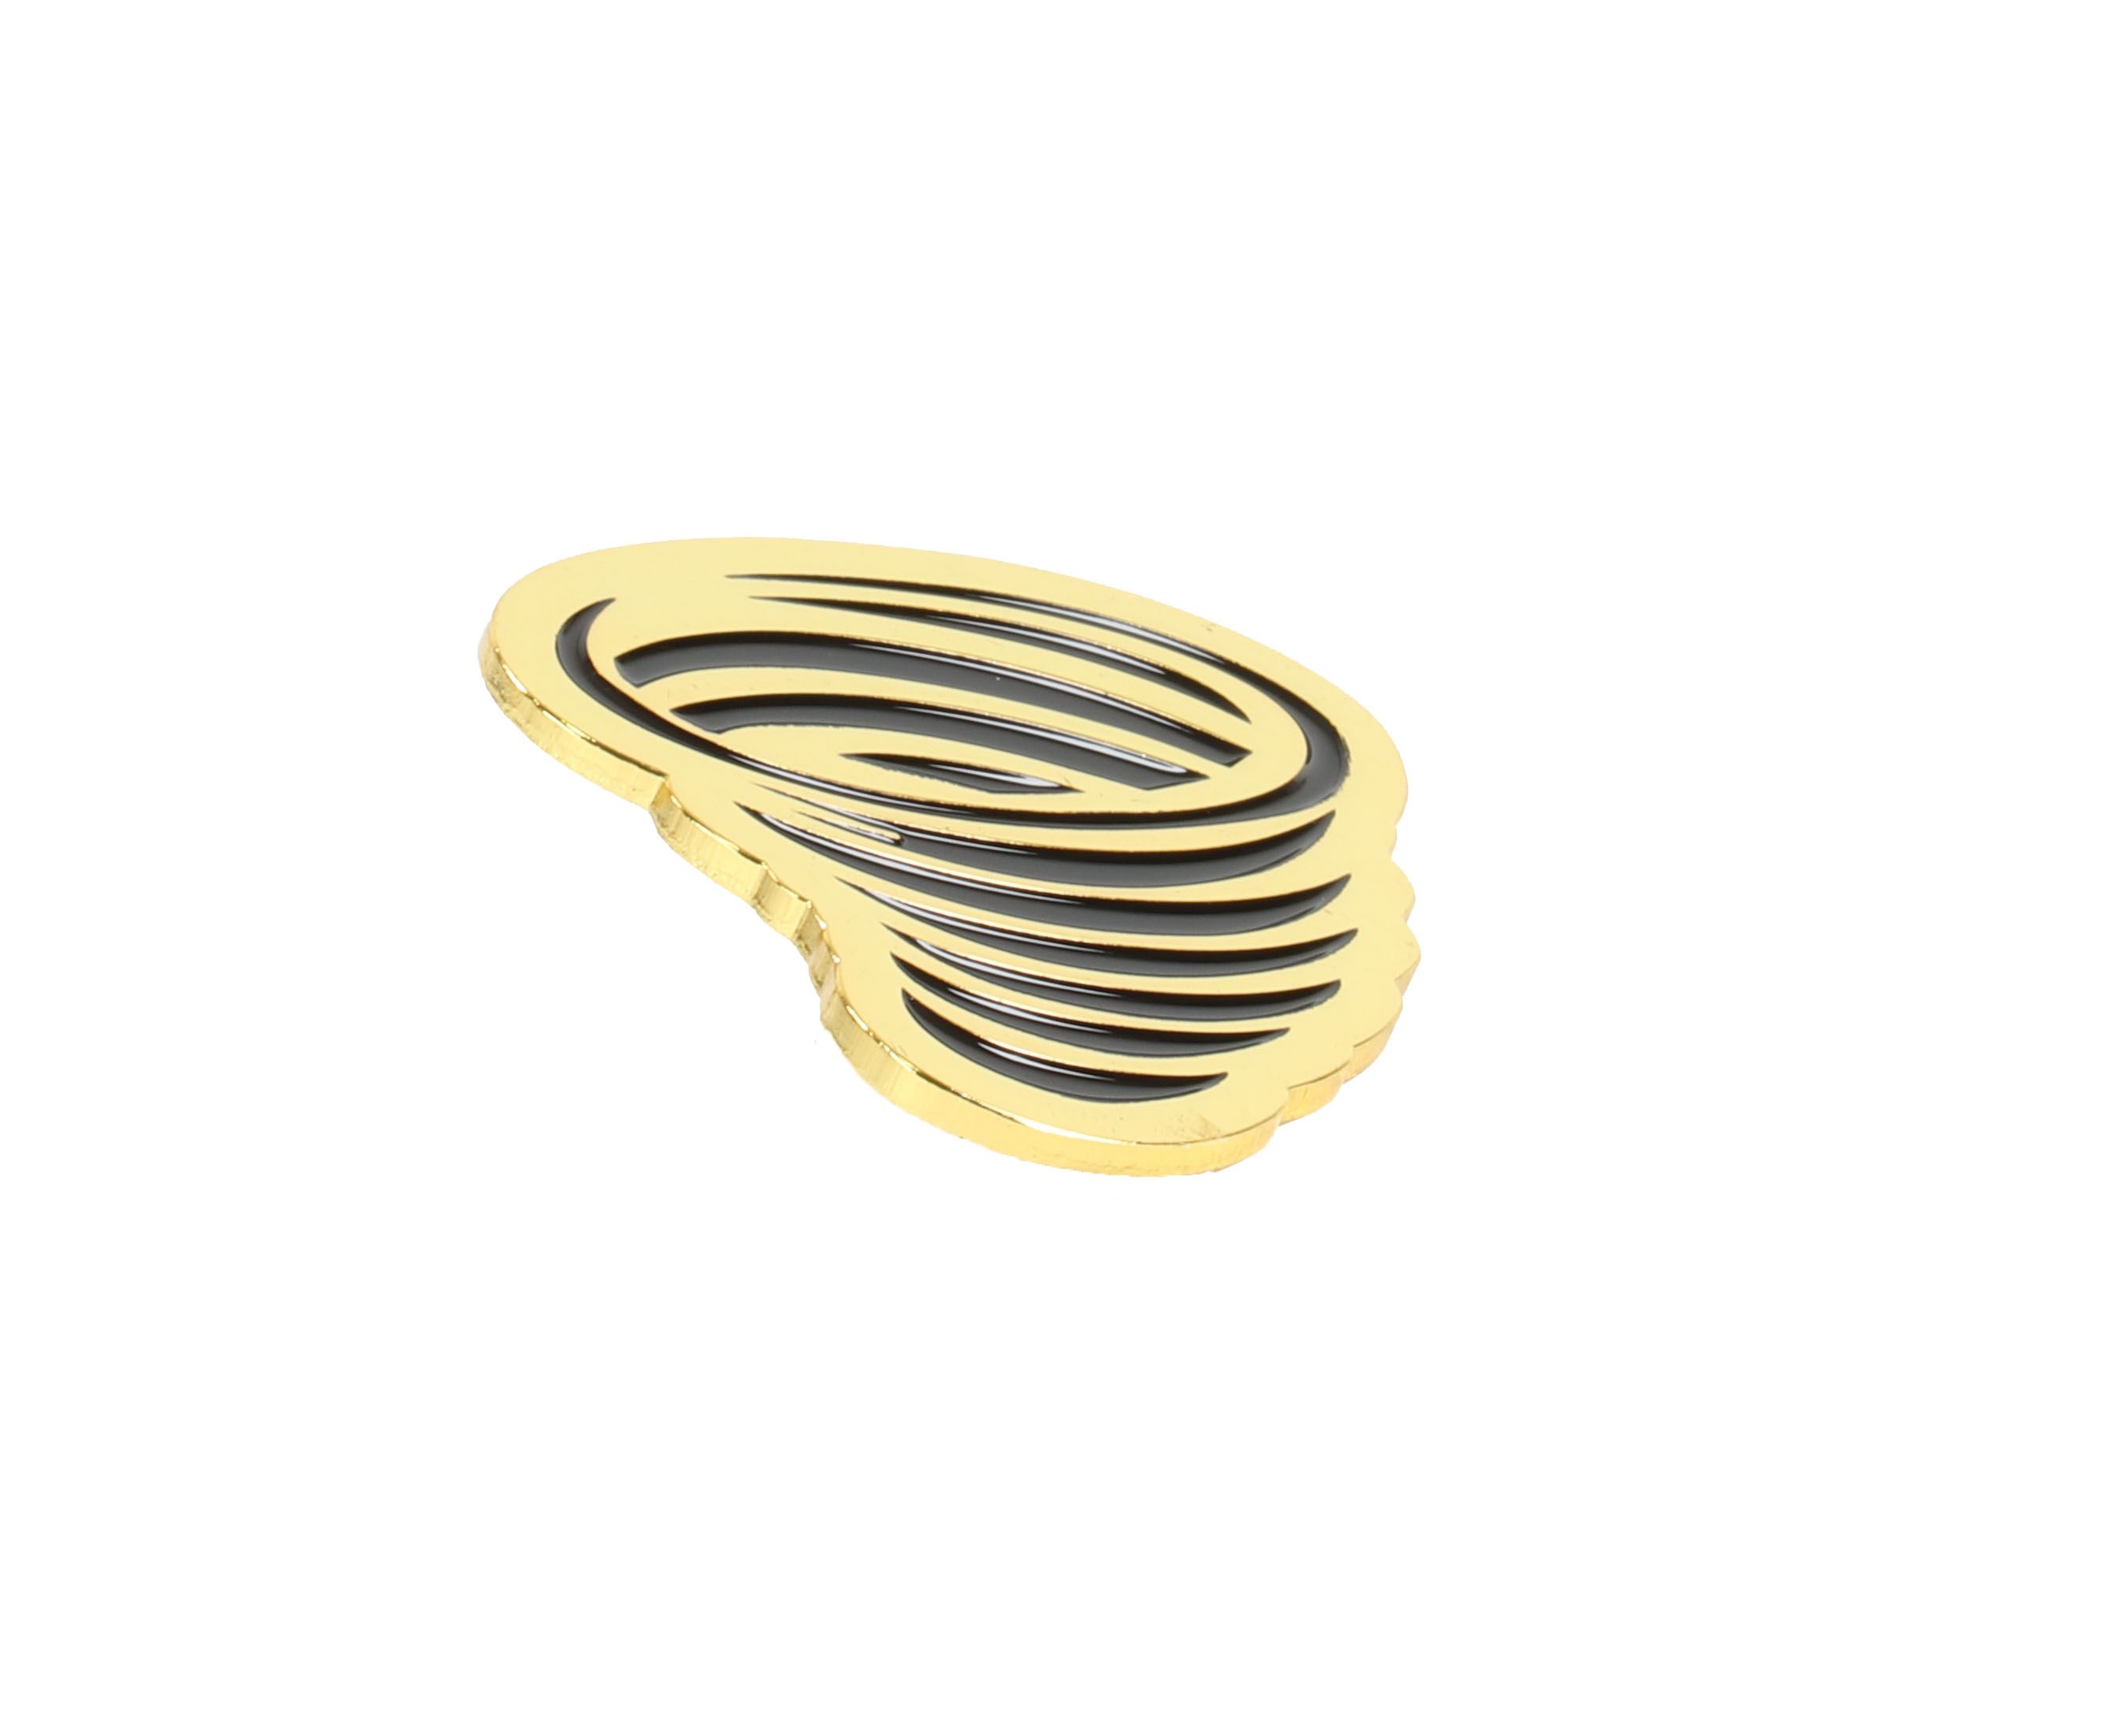 CapSpin Pin Wirbelsturm Gold Anstecker CapSpin